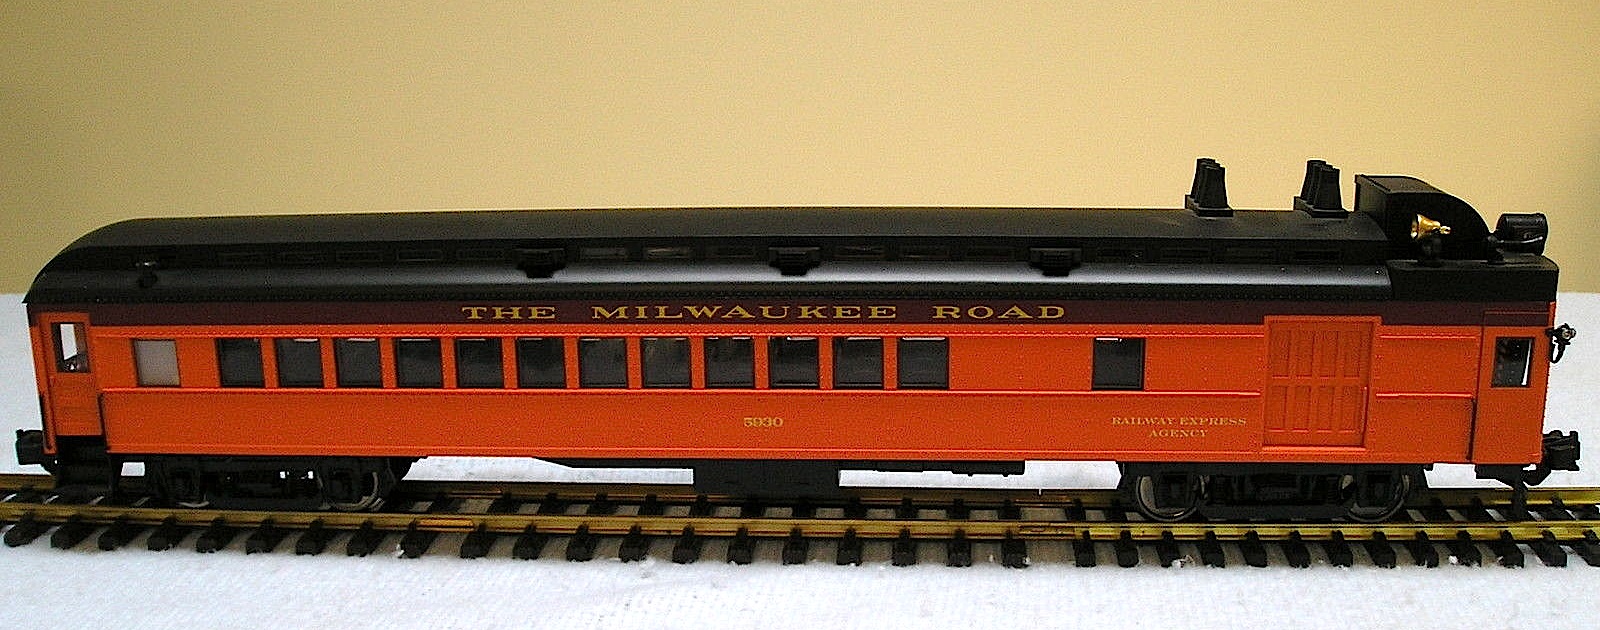 Milwaukee Road Triebwagen (Rail car) Doodlebug